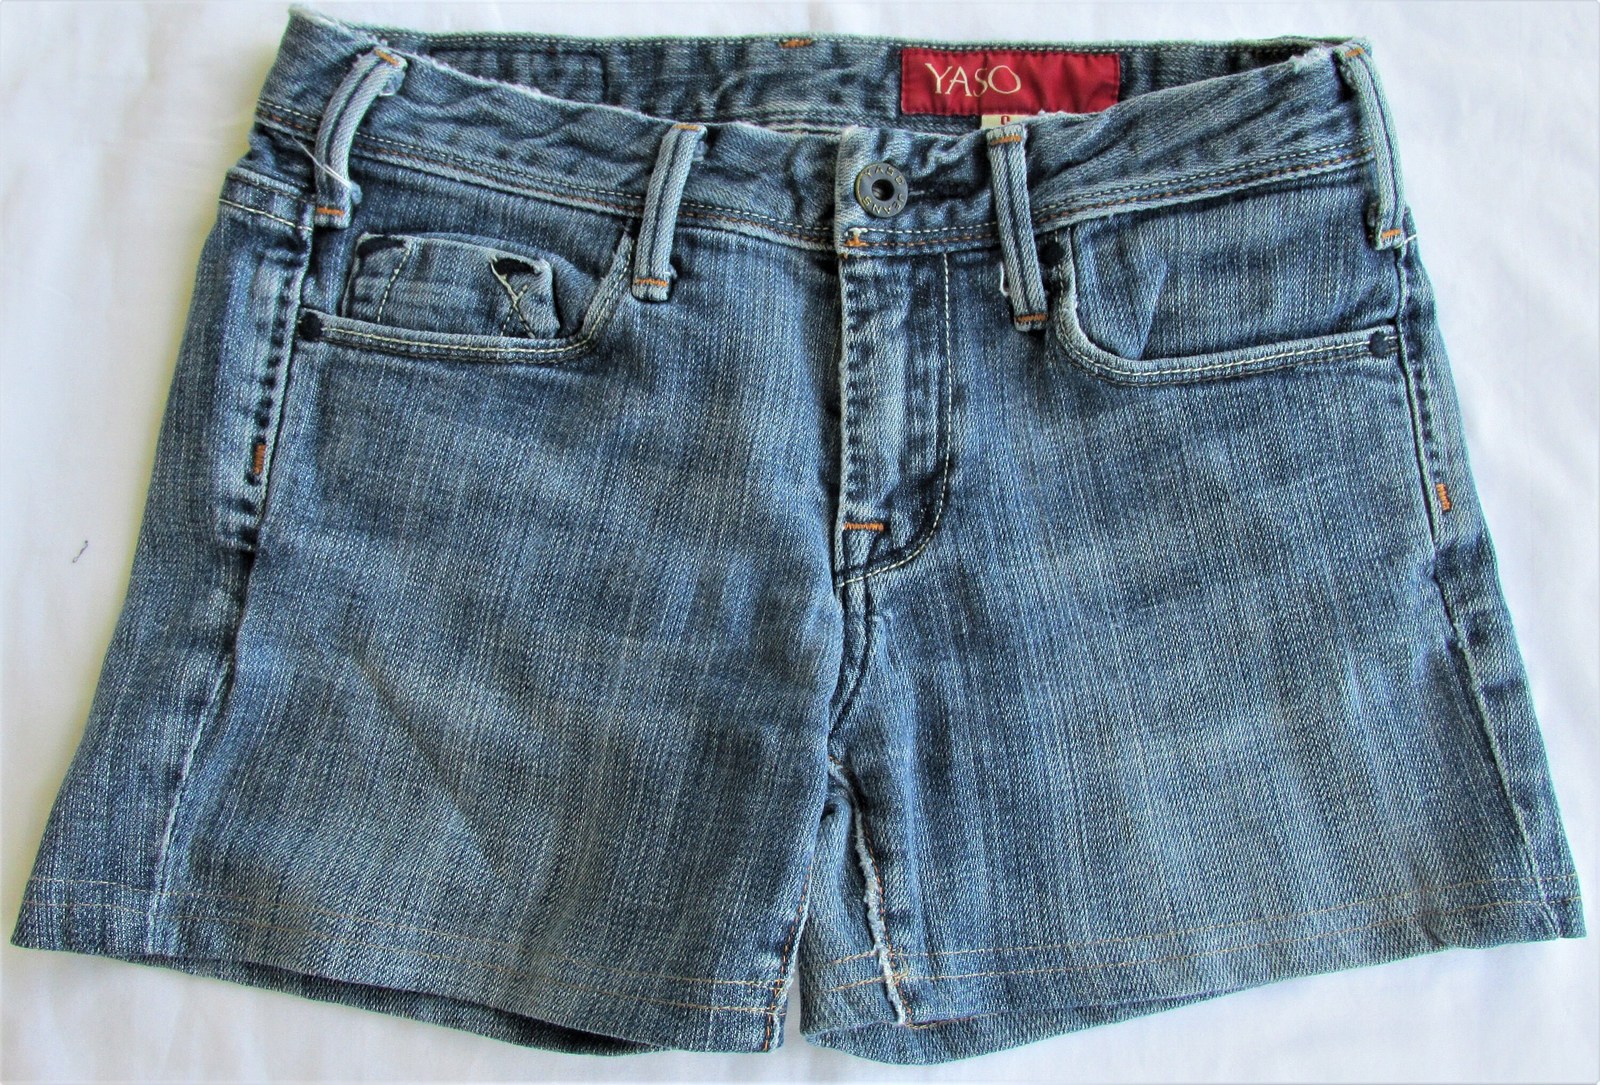 Primary image for Yaso Women's Denim Shorts Size 0 (25)